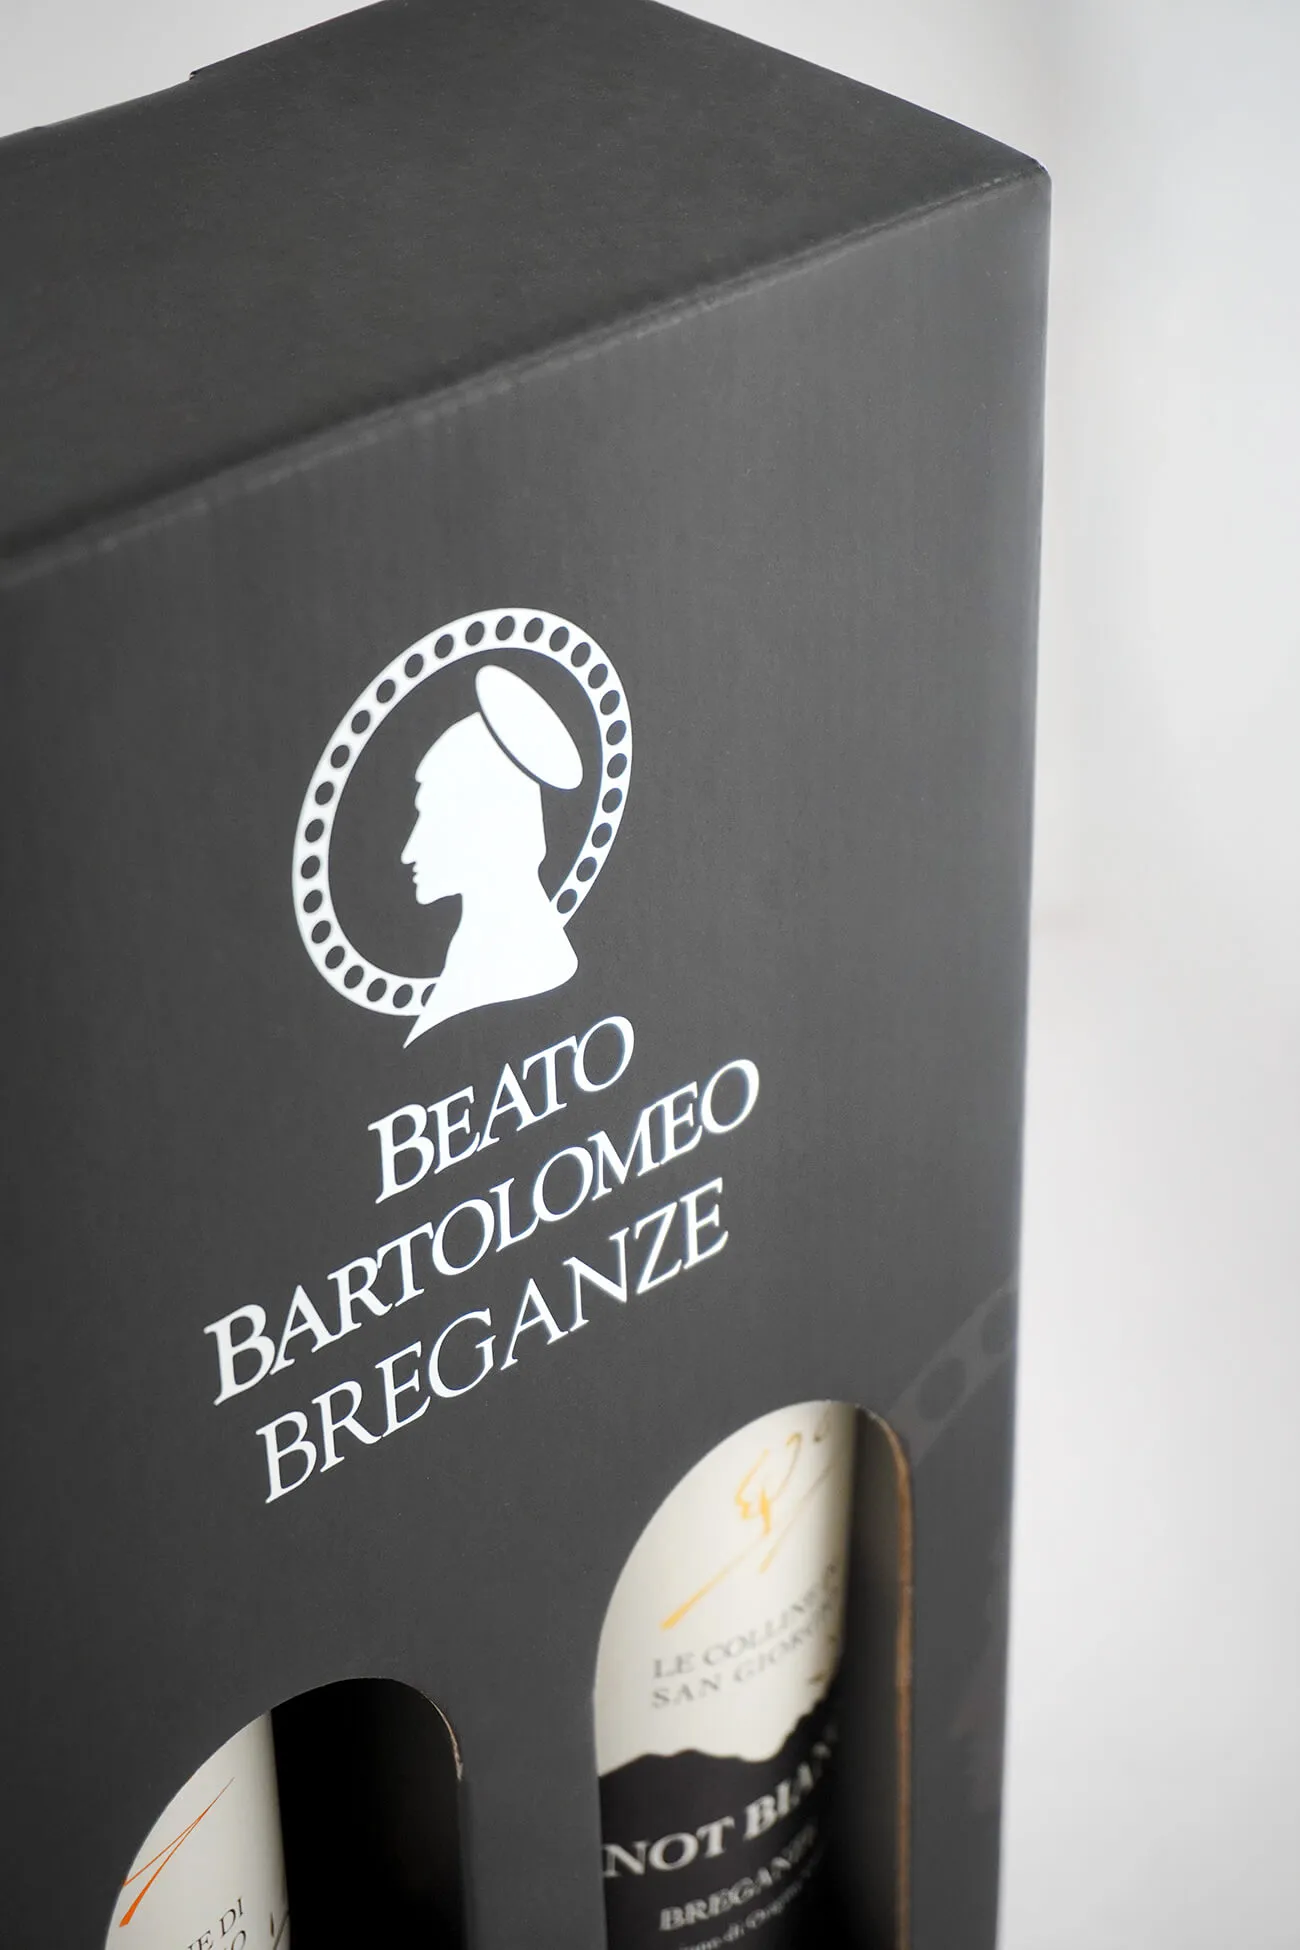 Packaging in cartone per Cantina Beato Bartolomeo Breganze